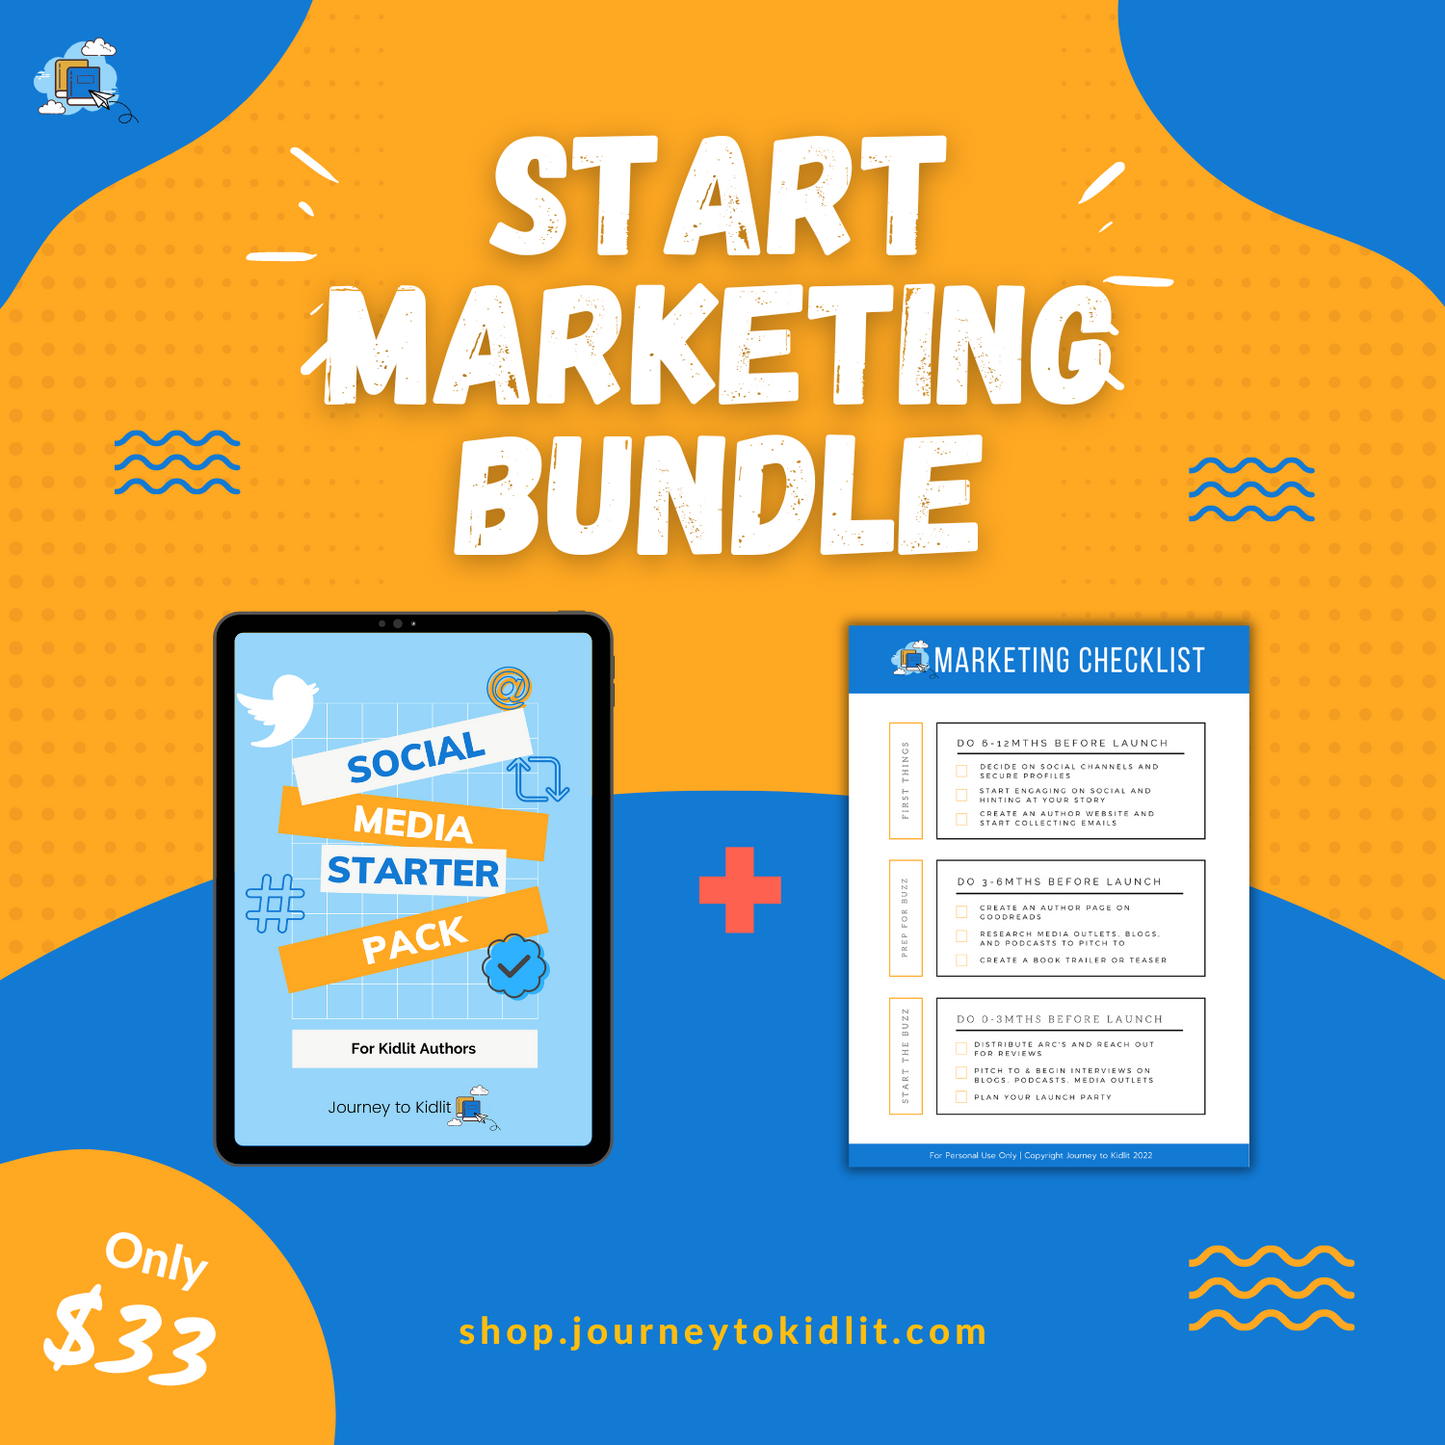 Start Marketing Your Children's Book | Exclusive Bundle Sale